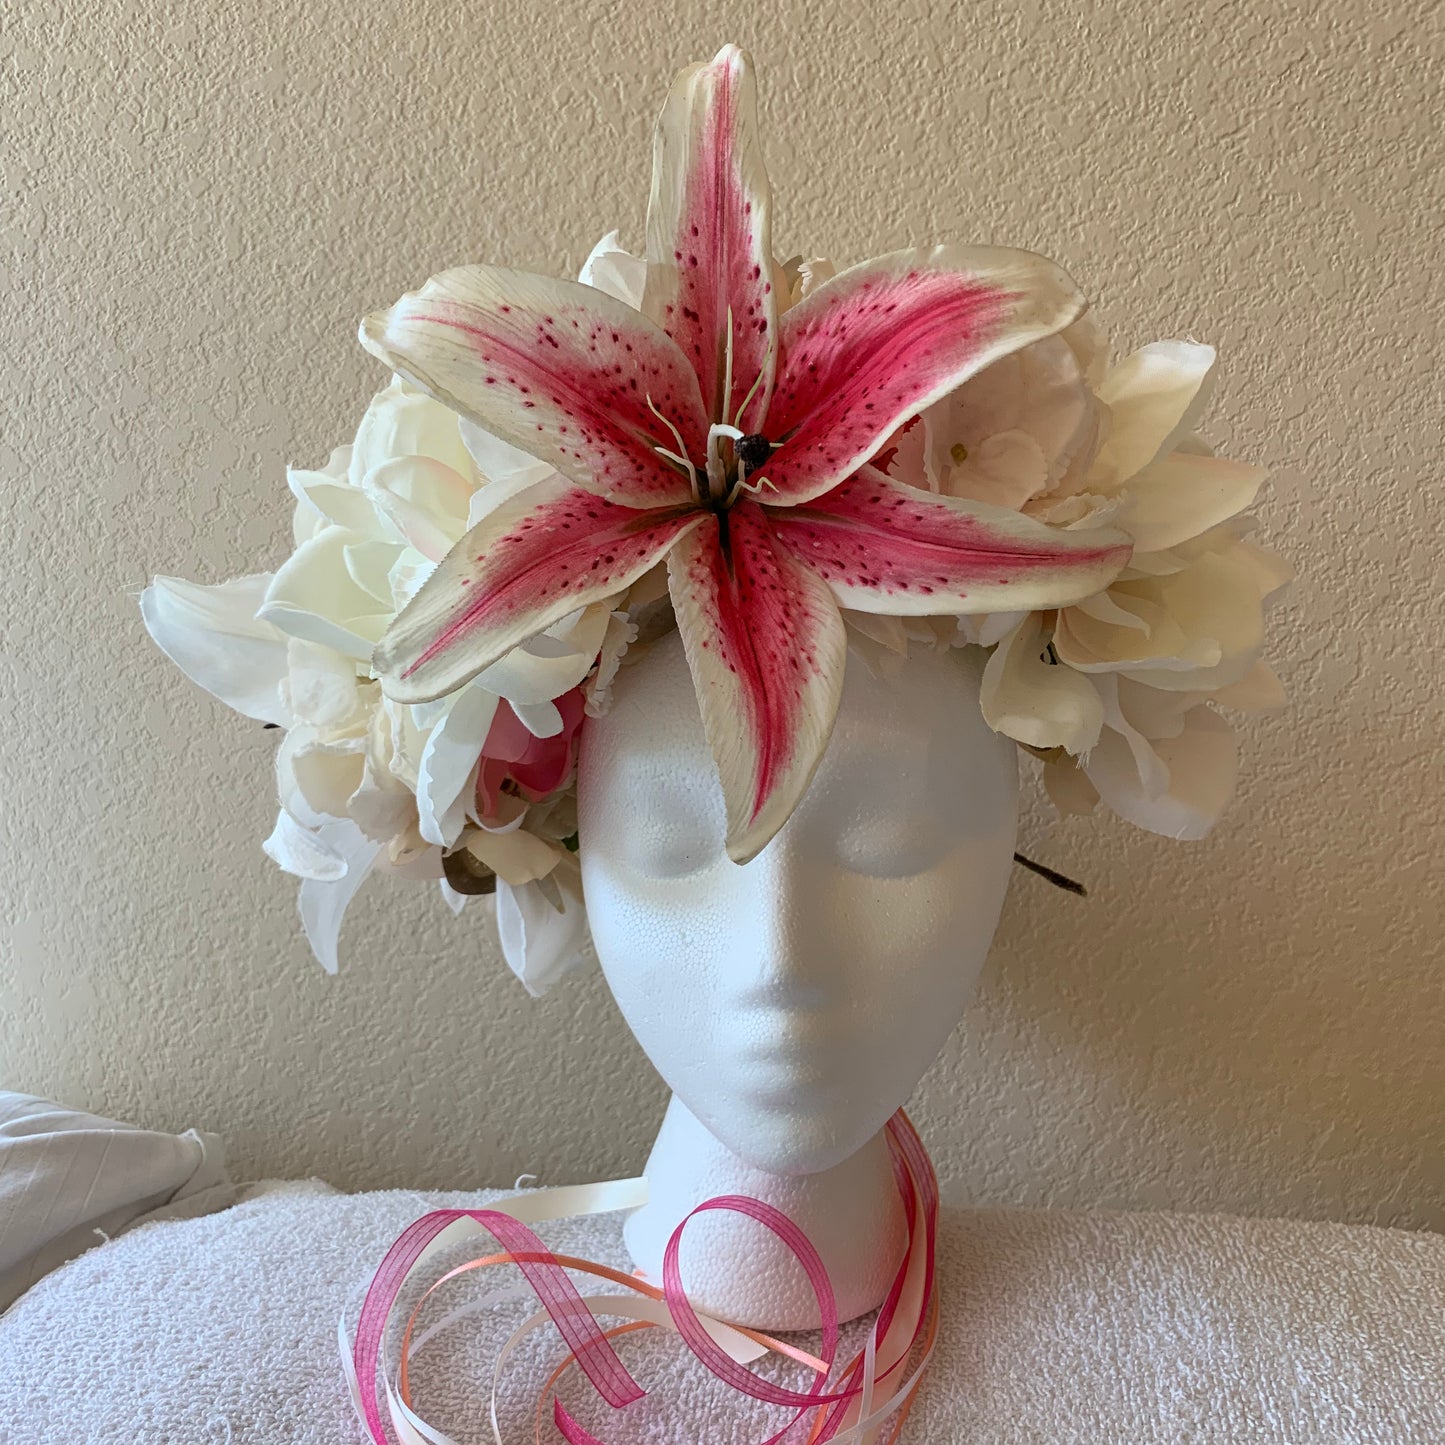 XL Fantasy Wreath - White & pink lilies